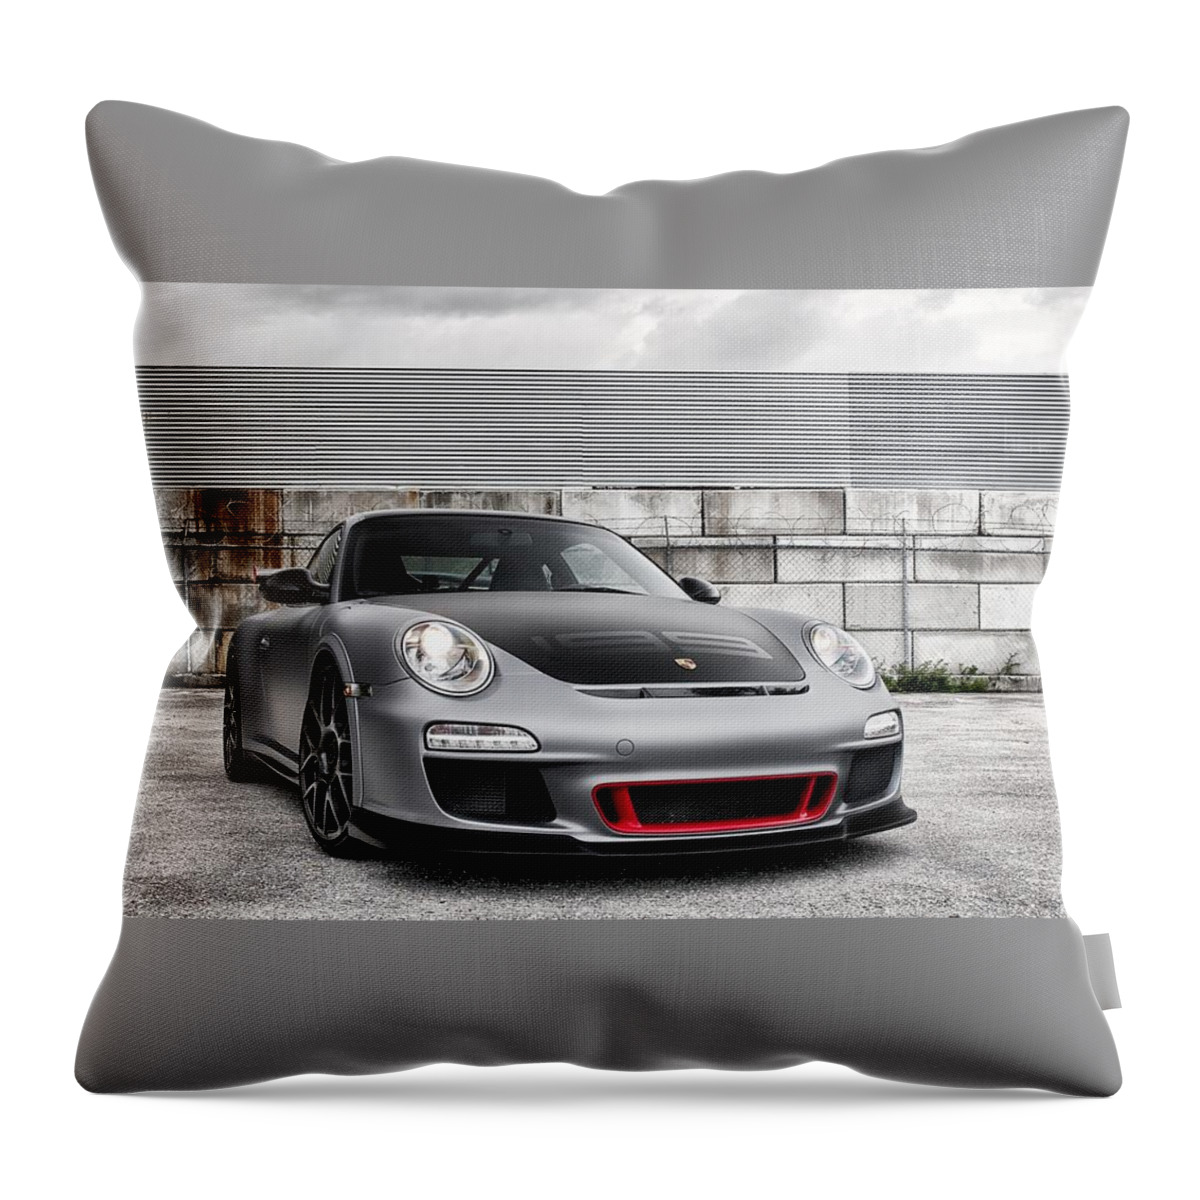 Porsche Throw Pillow featuring the photograph Porsche #2 by Jackie Russo